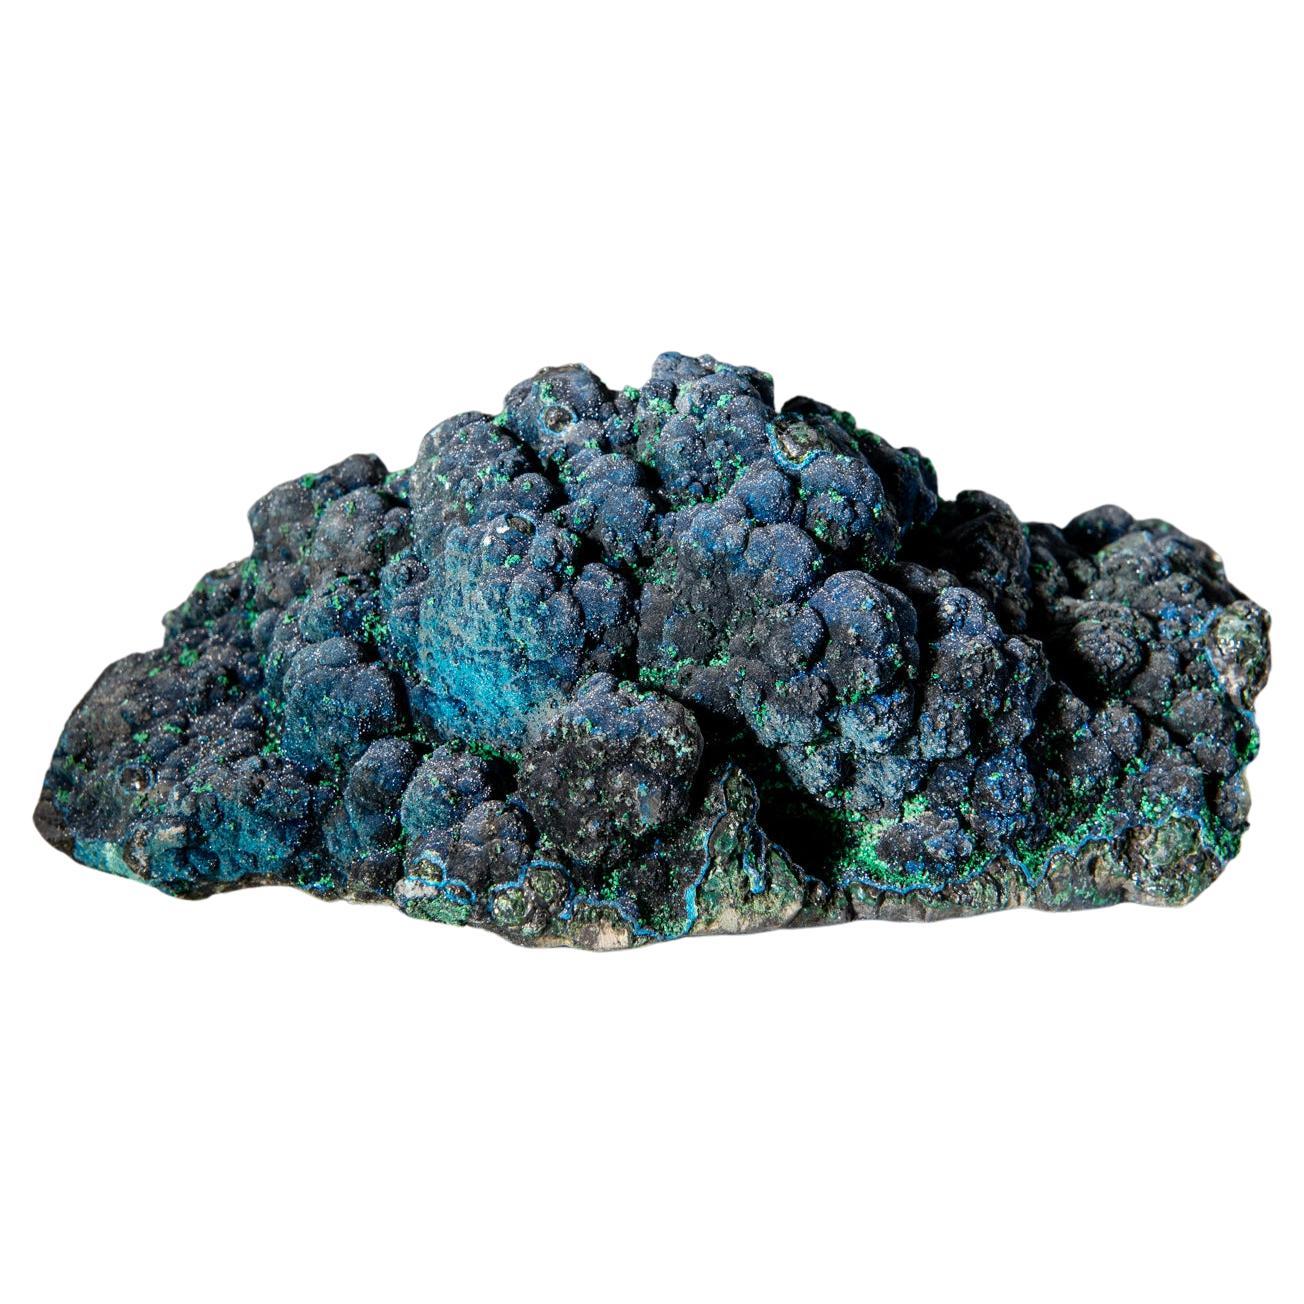 Cornetit aus der Mine L'Etoile du Congo, Demokratische Republik Kongo (Zaire)